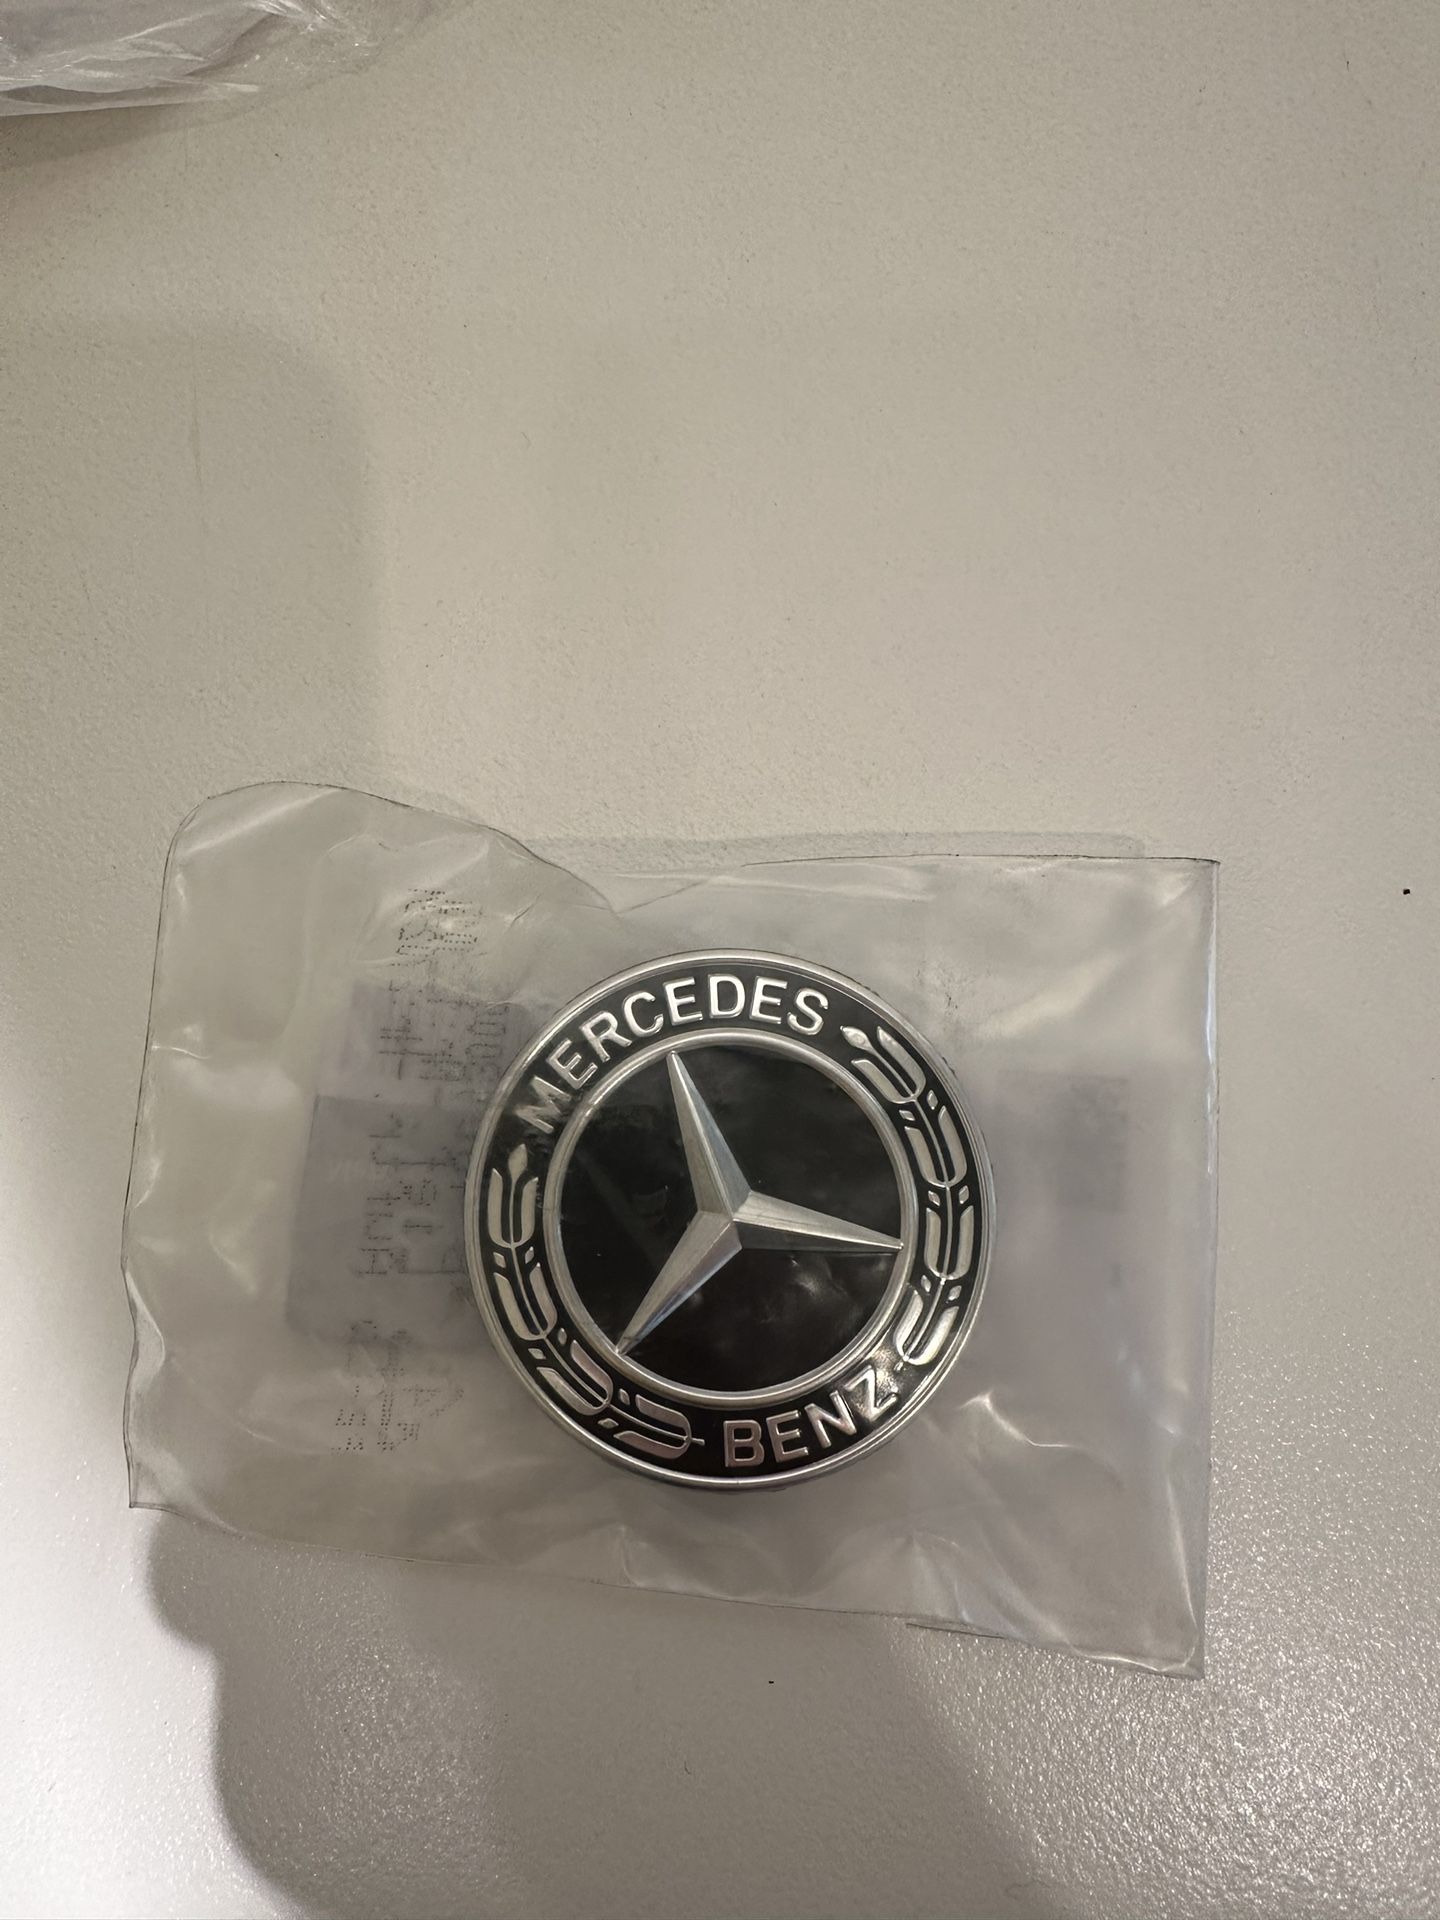 Mercedes Benz Emblem Part Replacement 